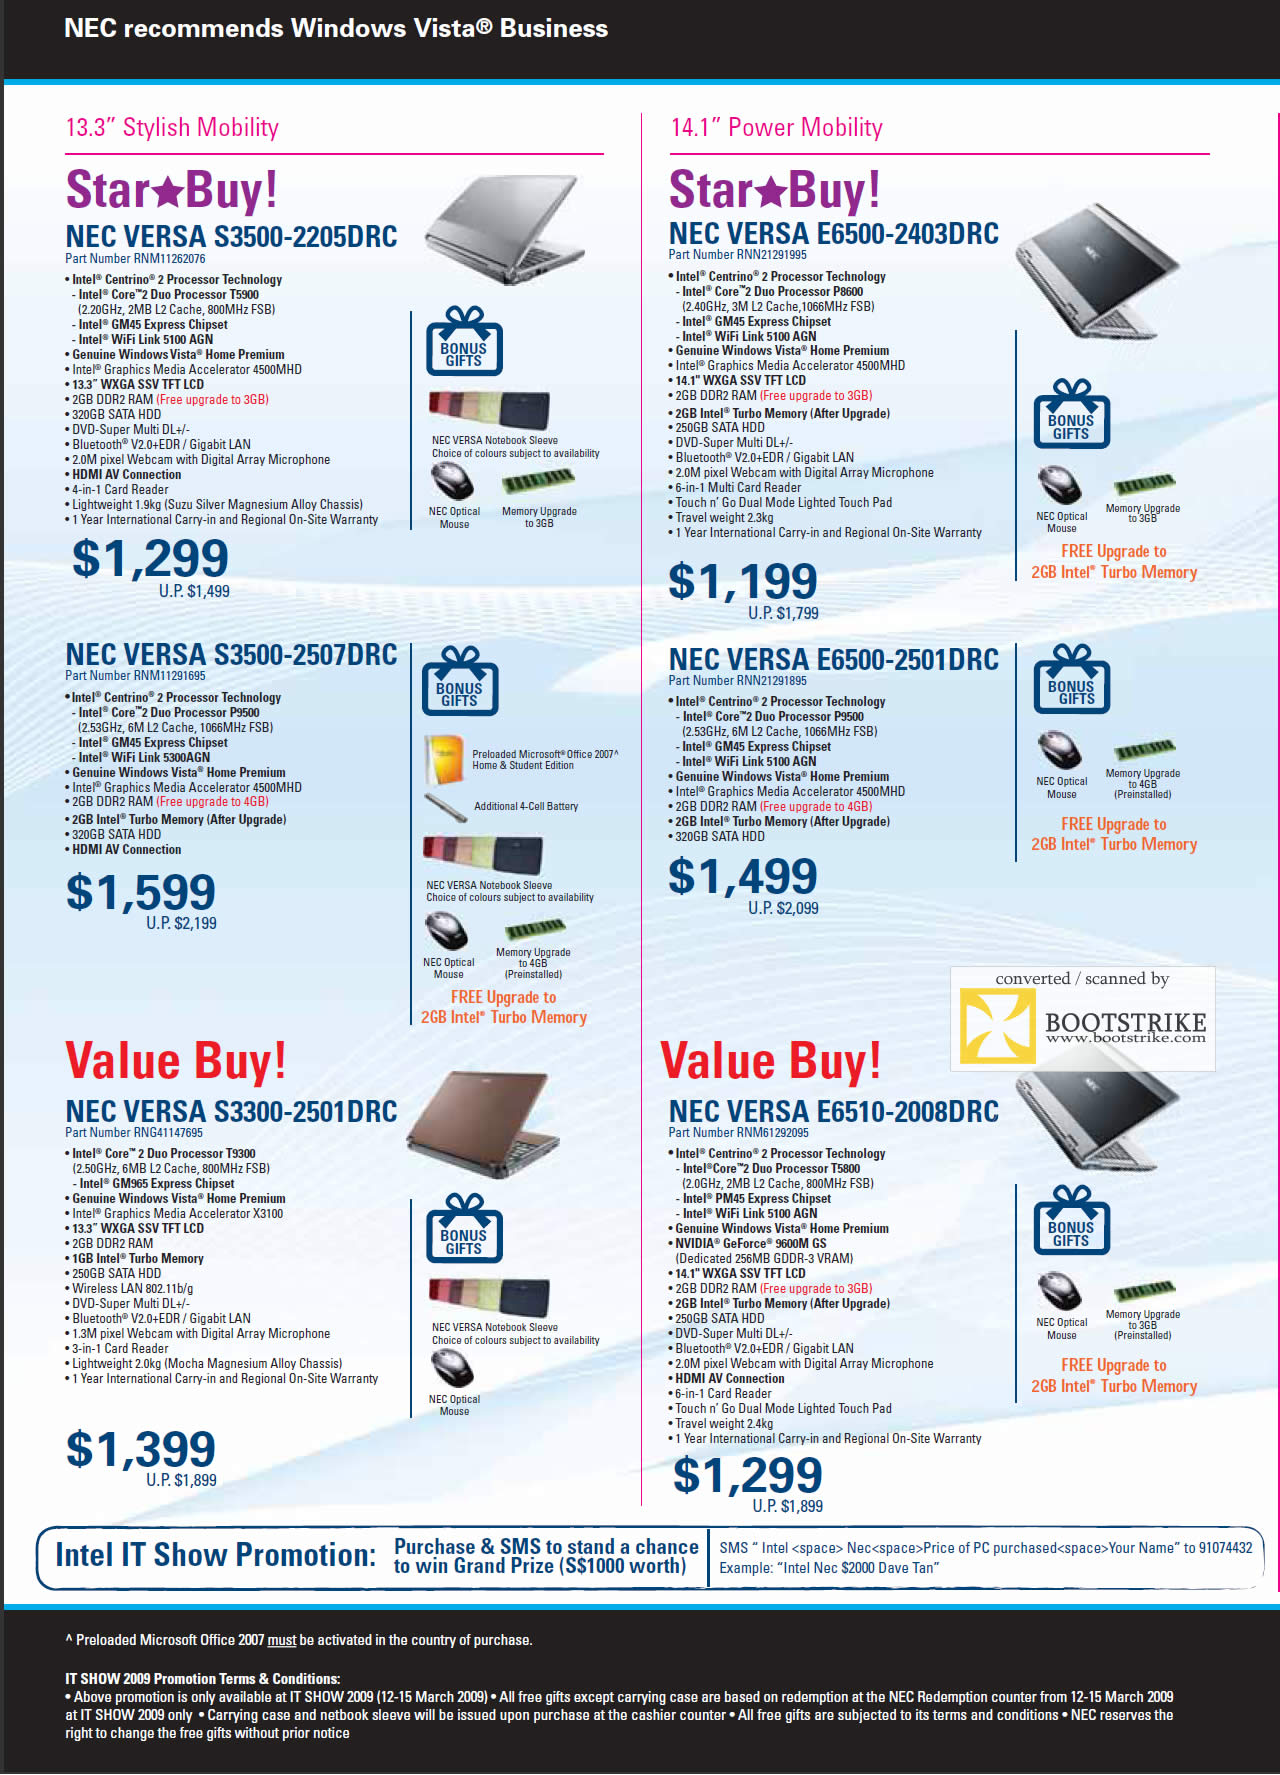 IT Show 2009 price list image brochure of NEC Versa Laptops 2